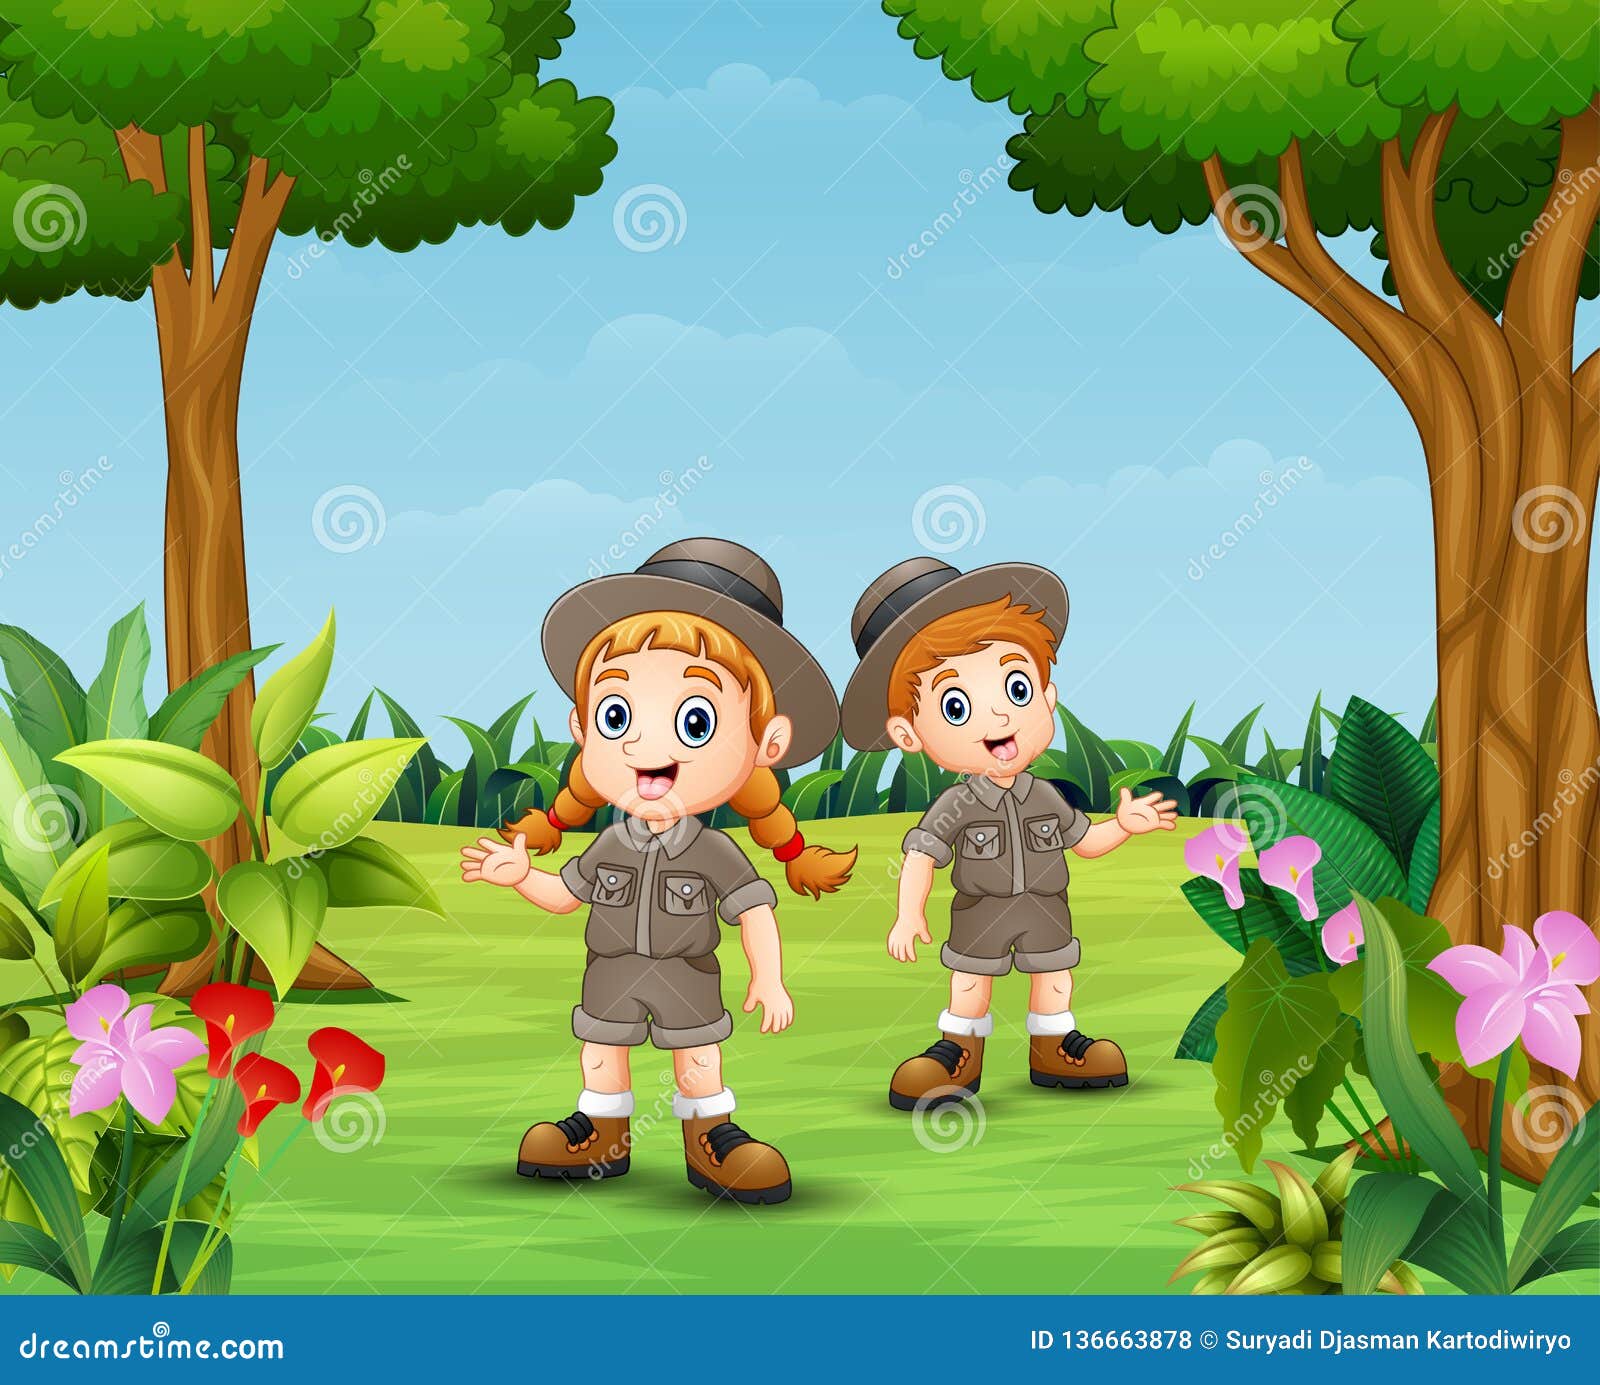 Cartoon of Zookeeper Boy and Girl in the Garden Stock Vector ... Girl Cartoon Zoo Keeper